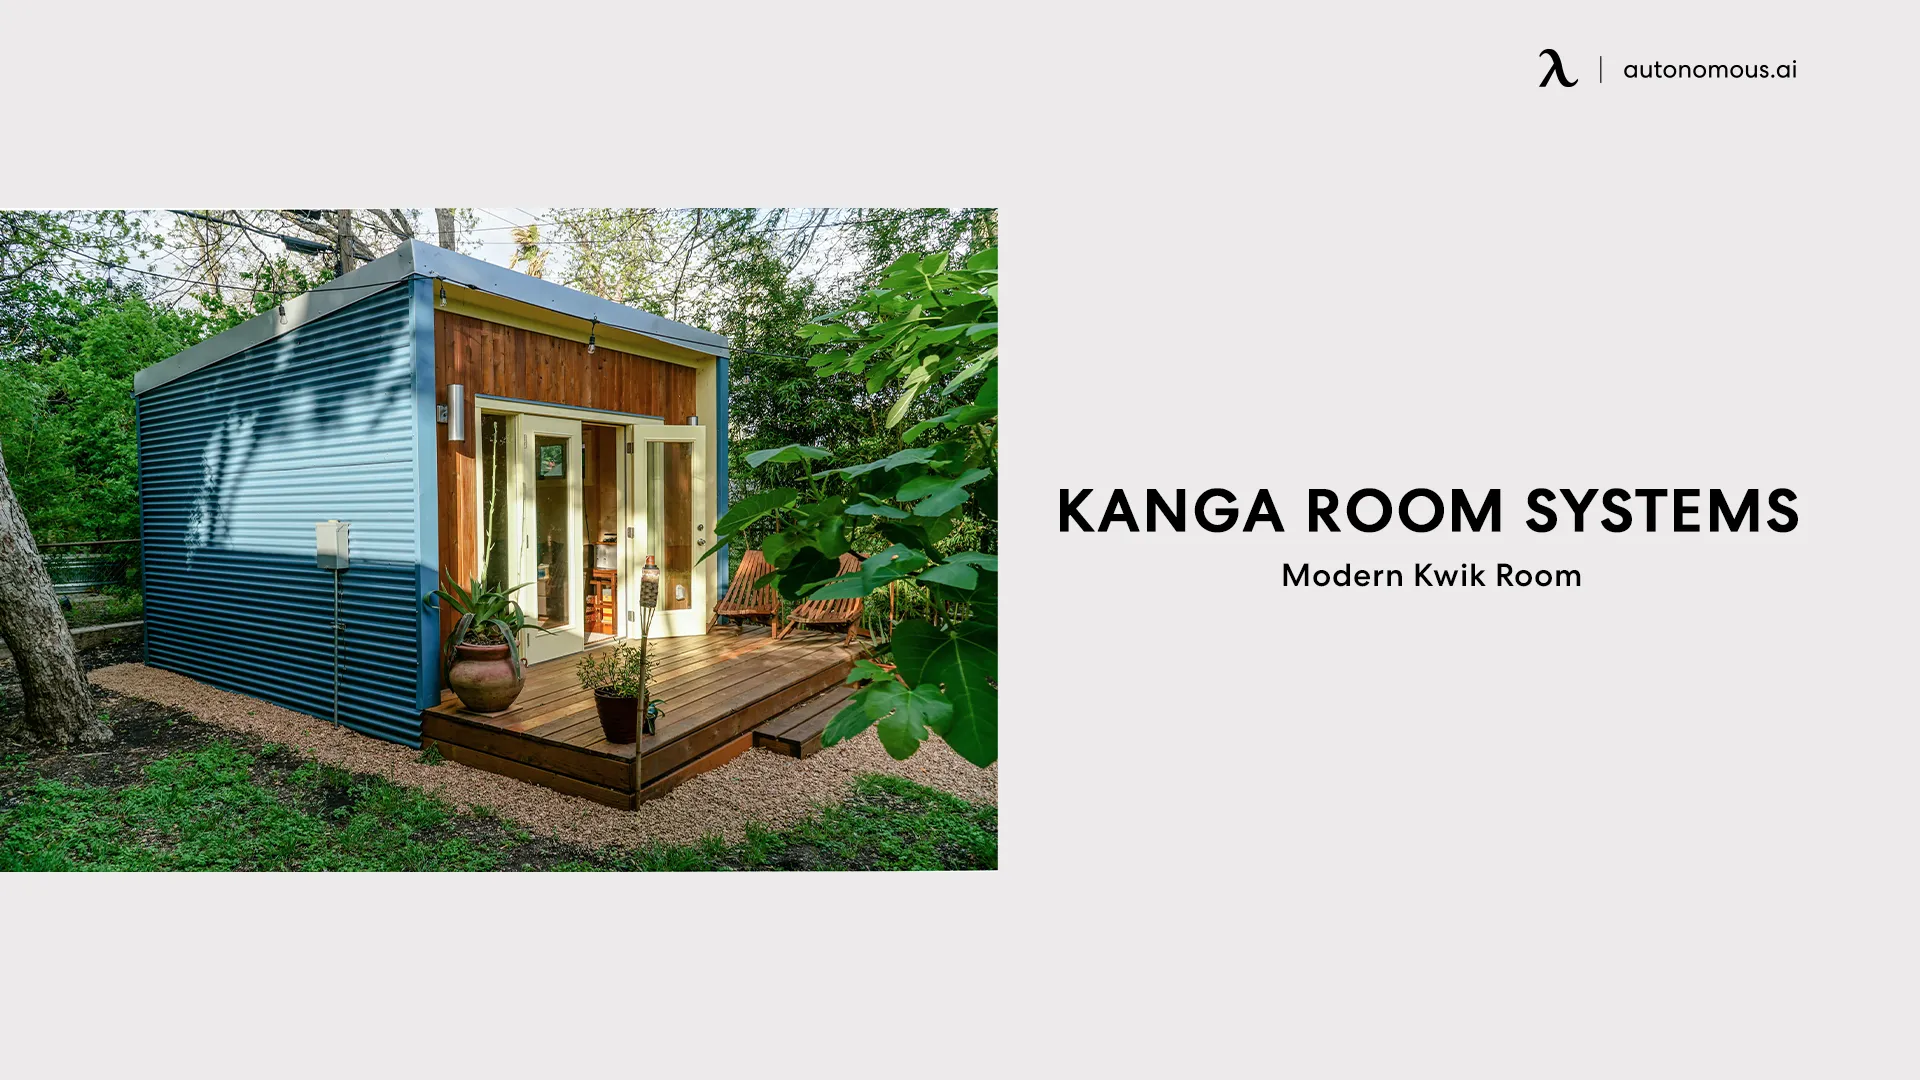 Kwik Room by Kanga Room Systems